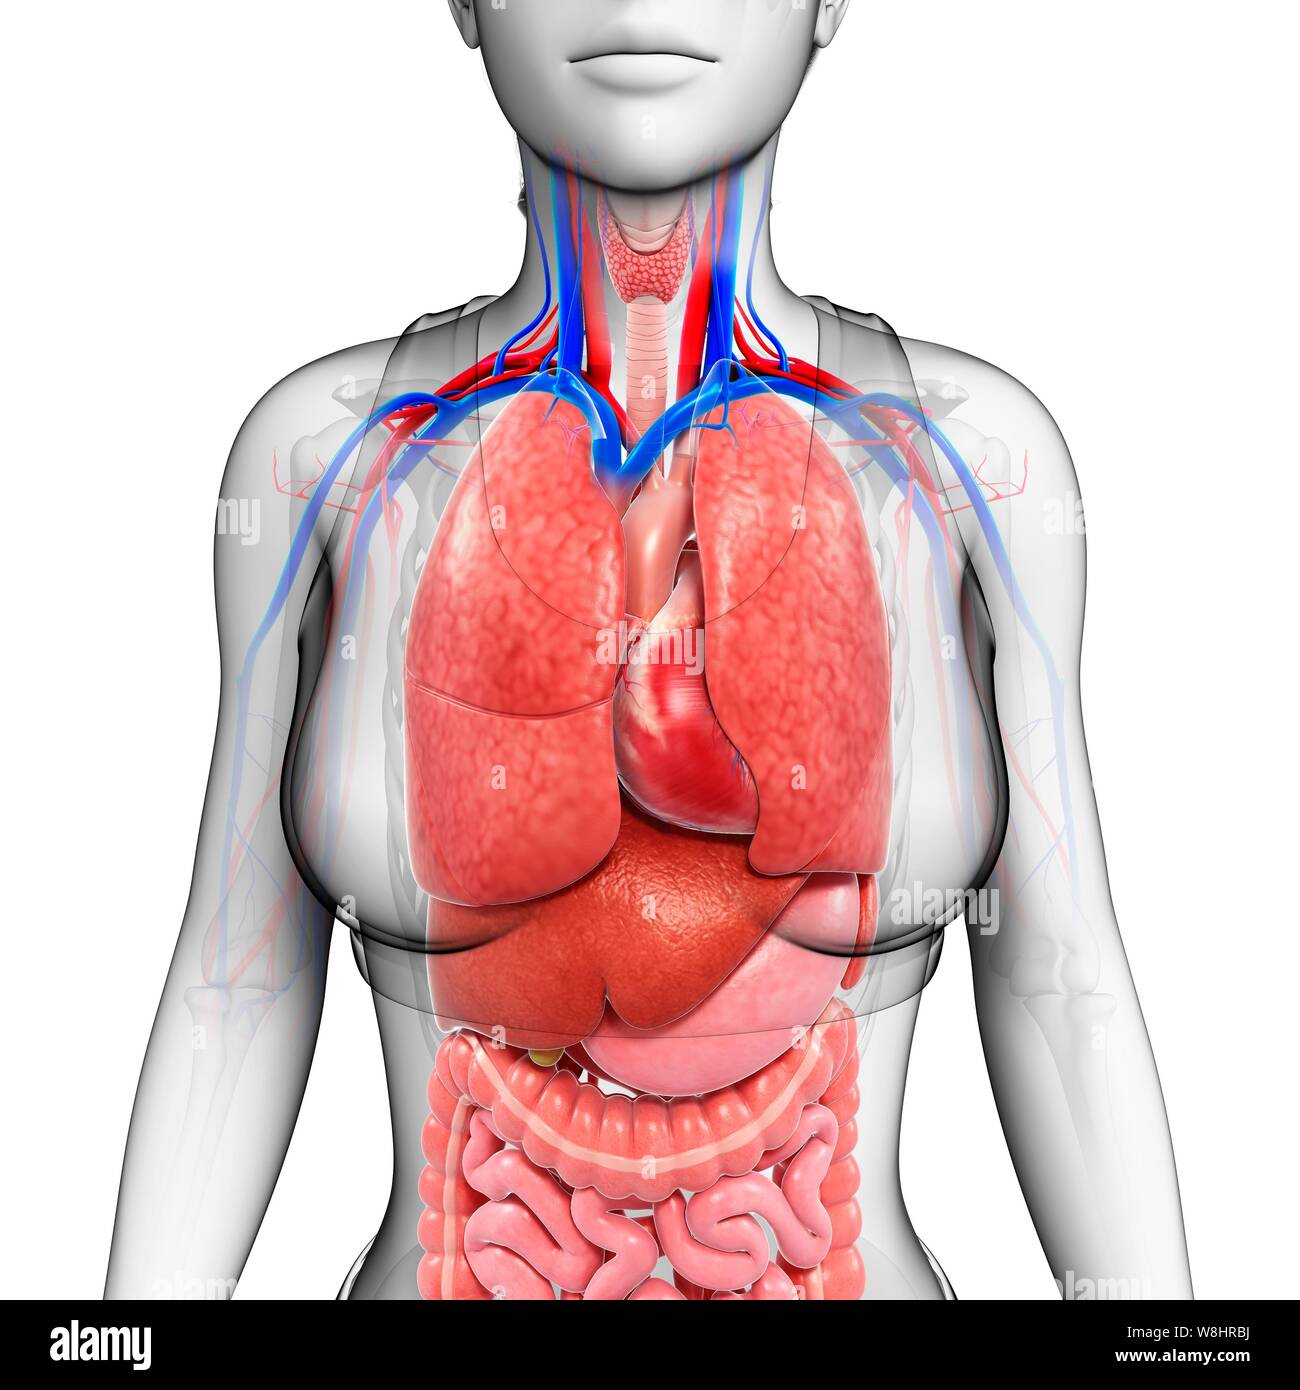 Illustration of female body organs Stock Photo - Alamy